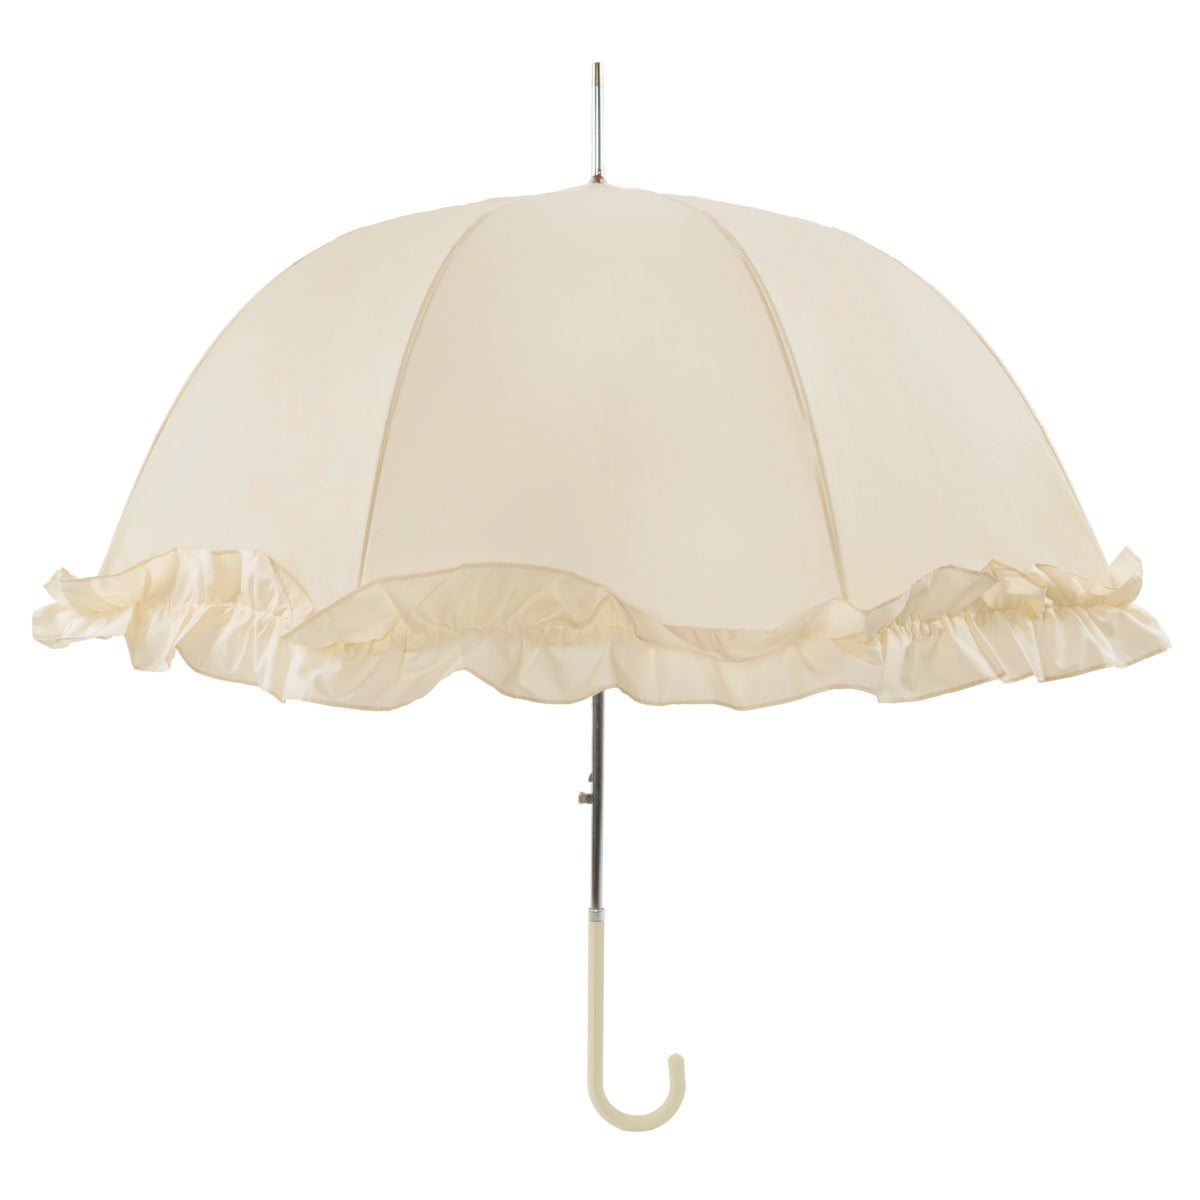 Single Frilled Ivory Umbrella Open Vertical